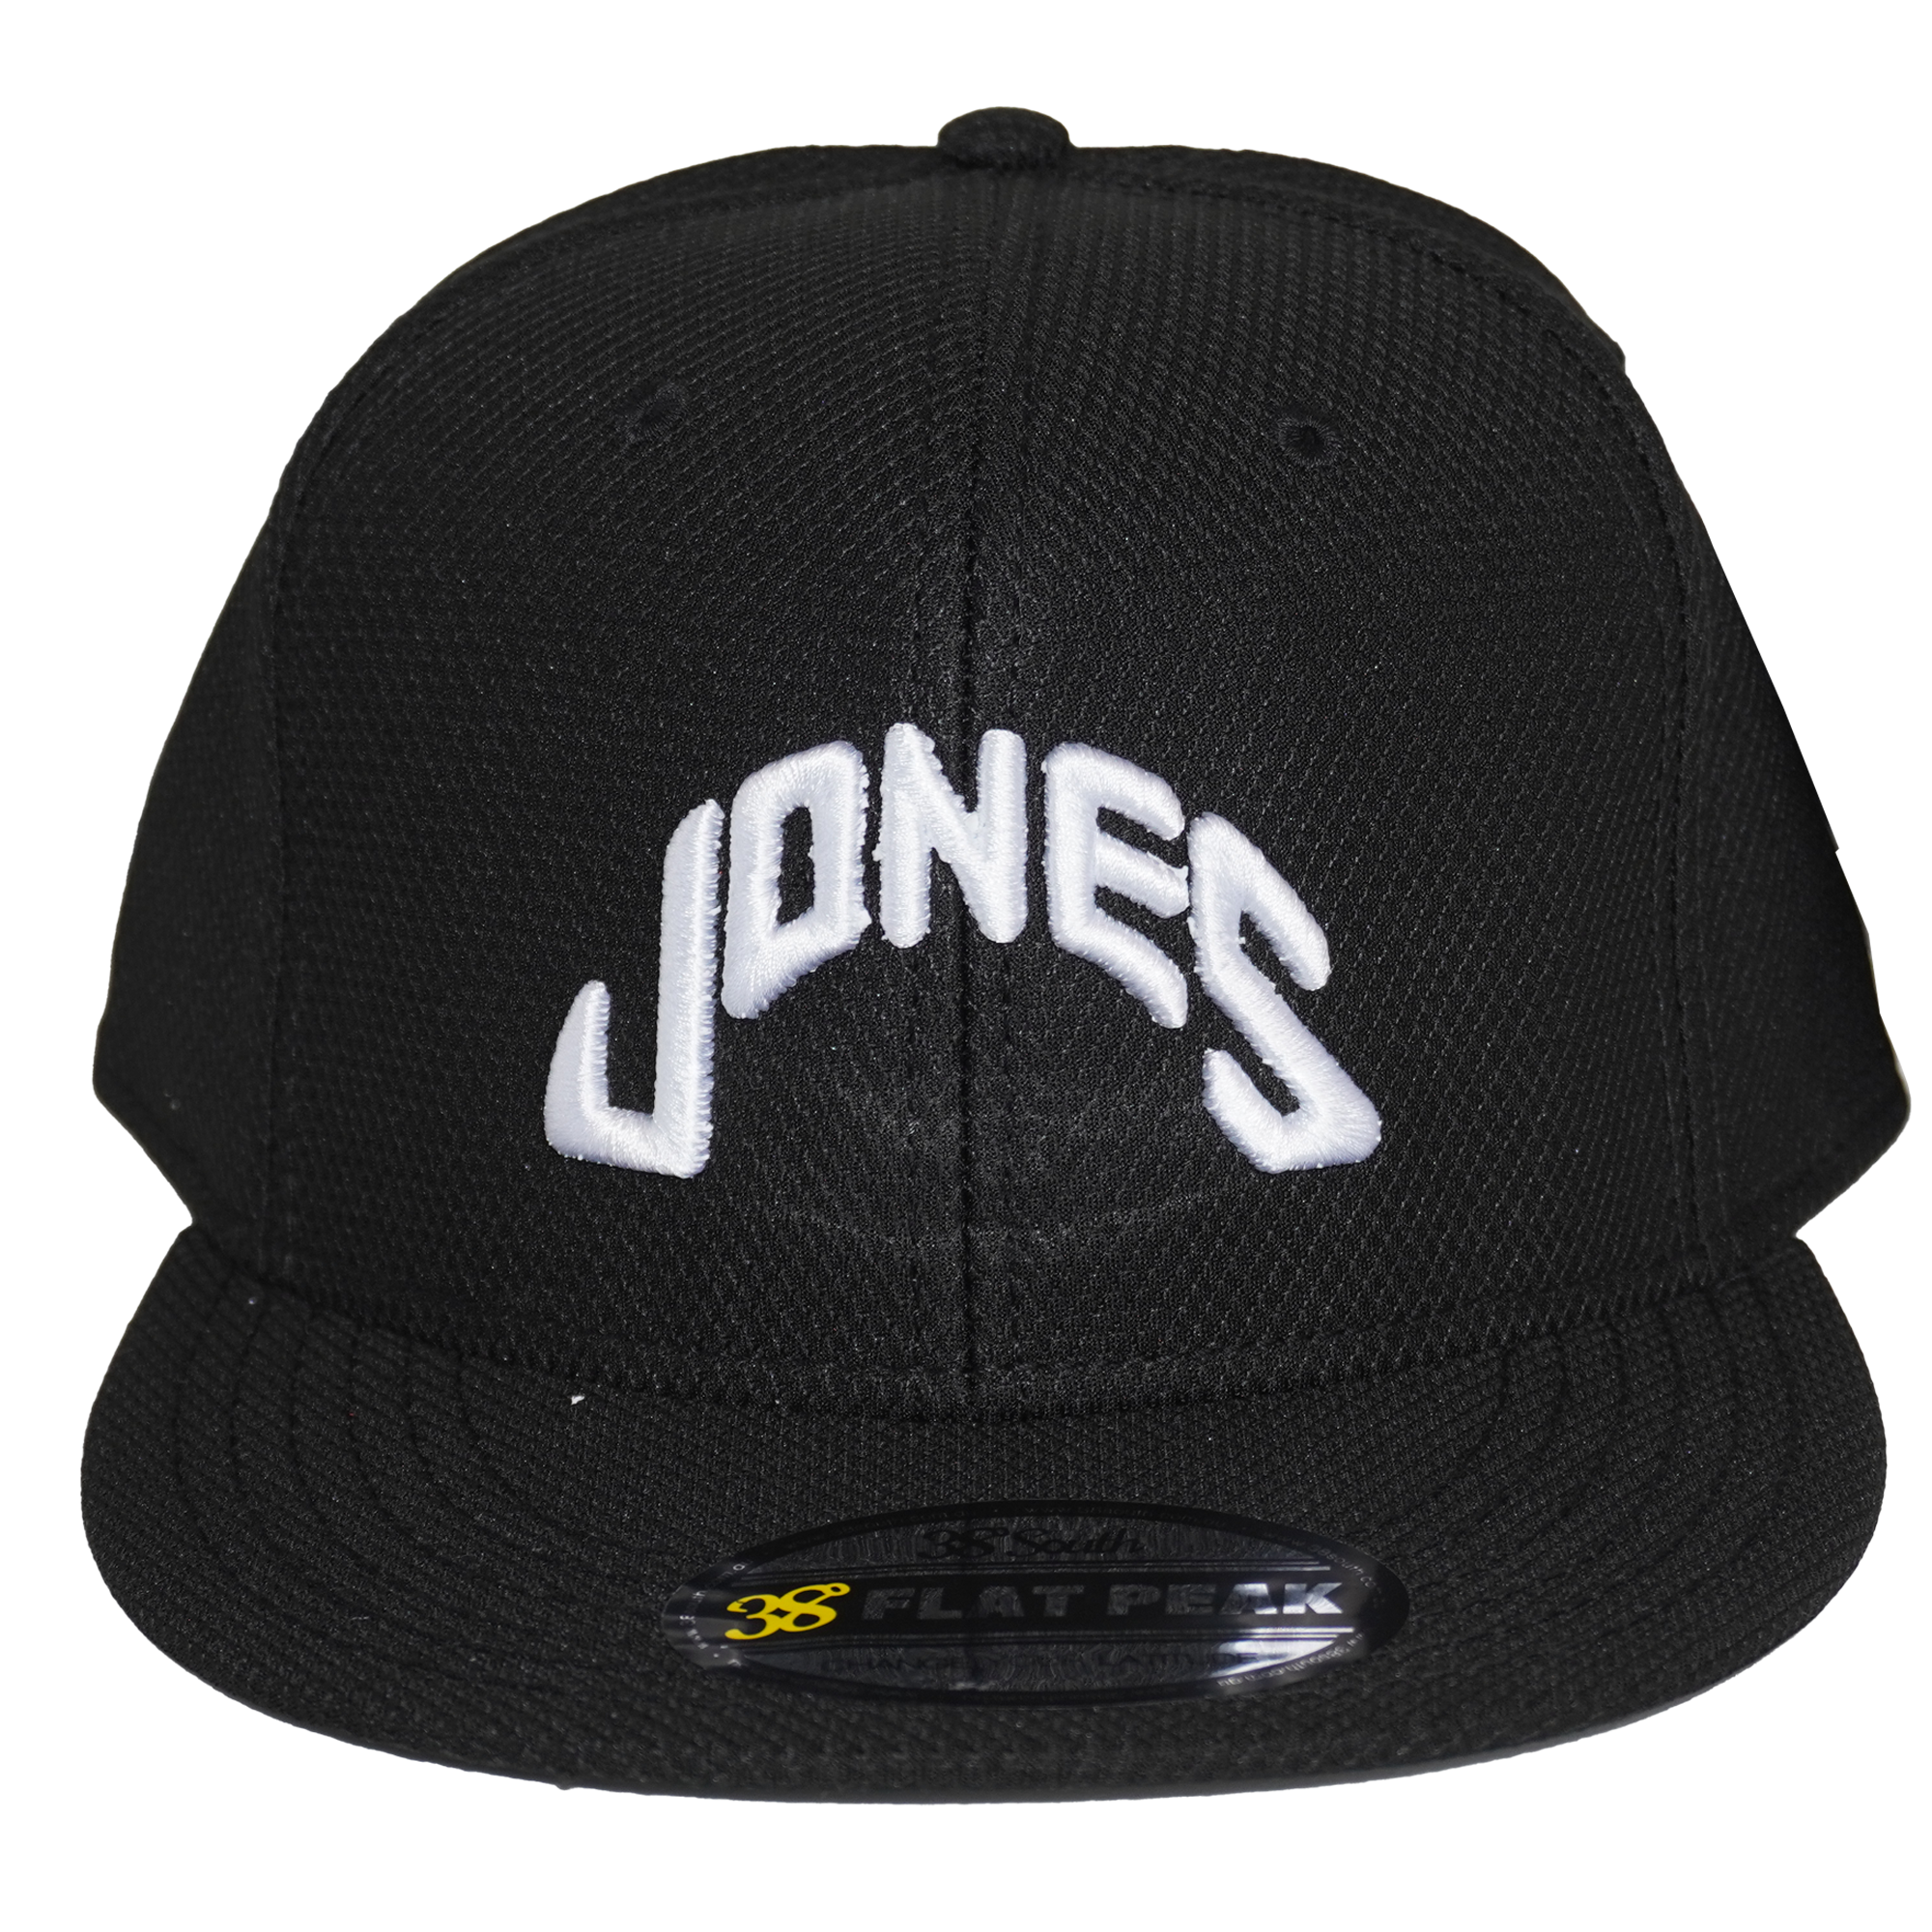 Jones Adjustable Flat Peak Cap